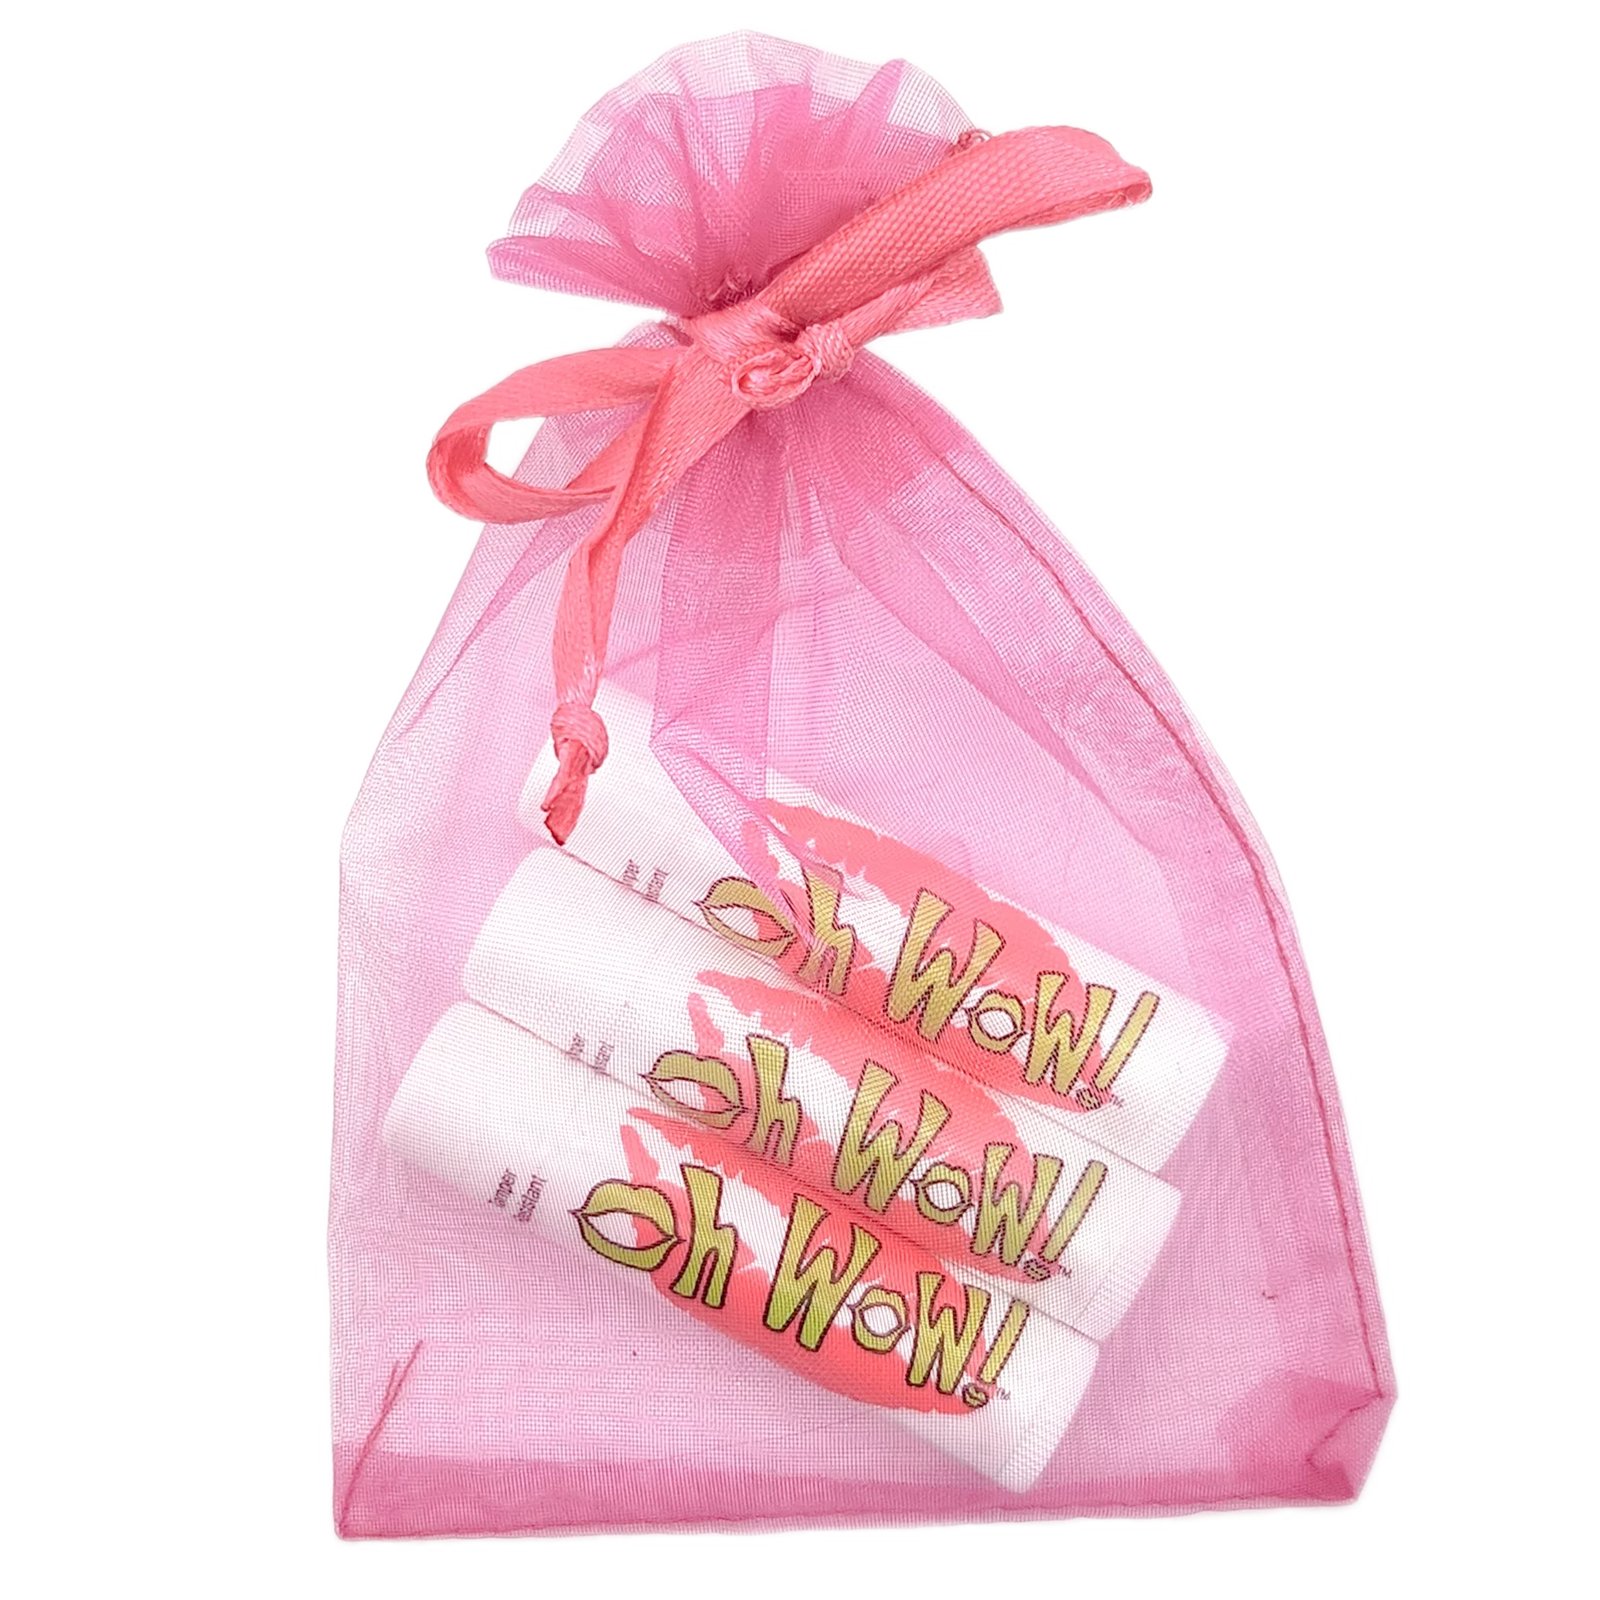 Organza bag with three Oh WoW!® lip balm tubes inside